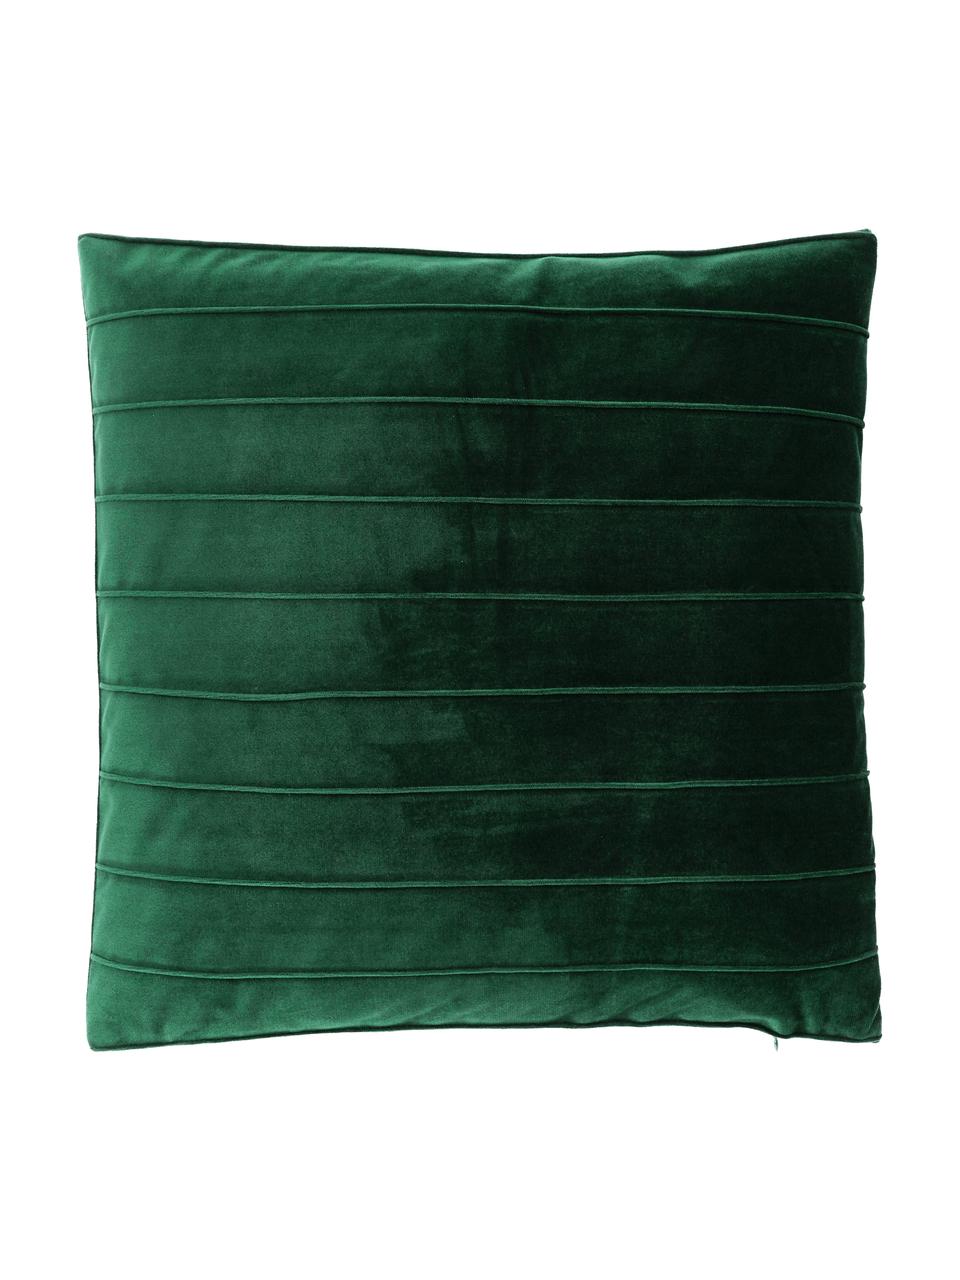 Samt-Kissenhülle Lola in Dunkelgrün mit Struktumuster, Samt (100% Polyester), Grün, 40 x 40 cm